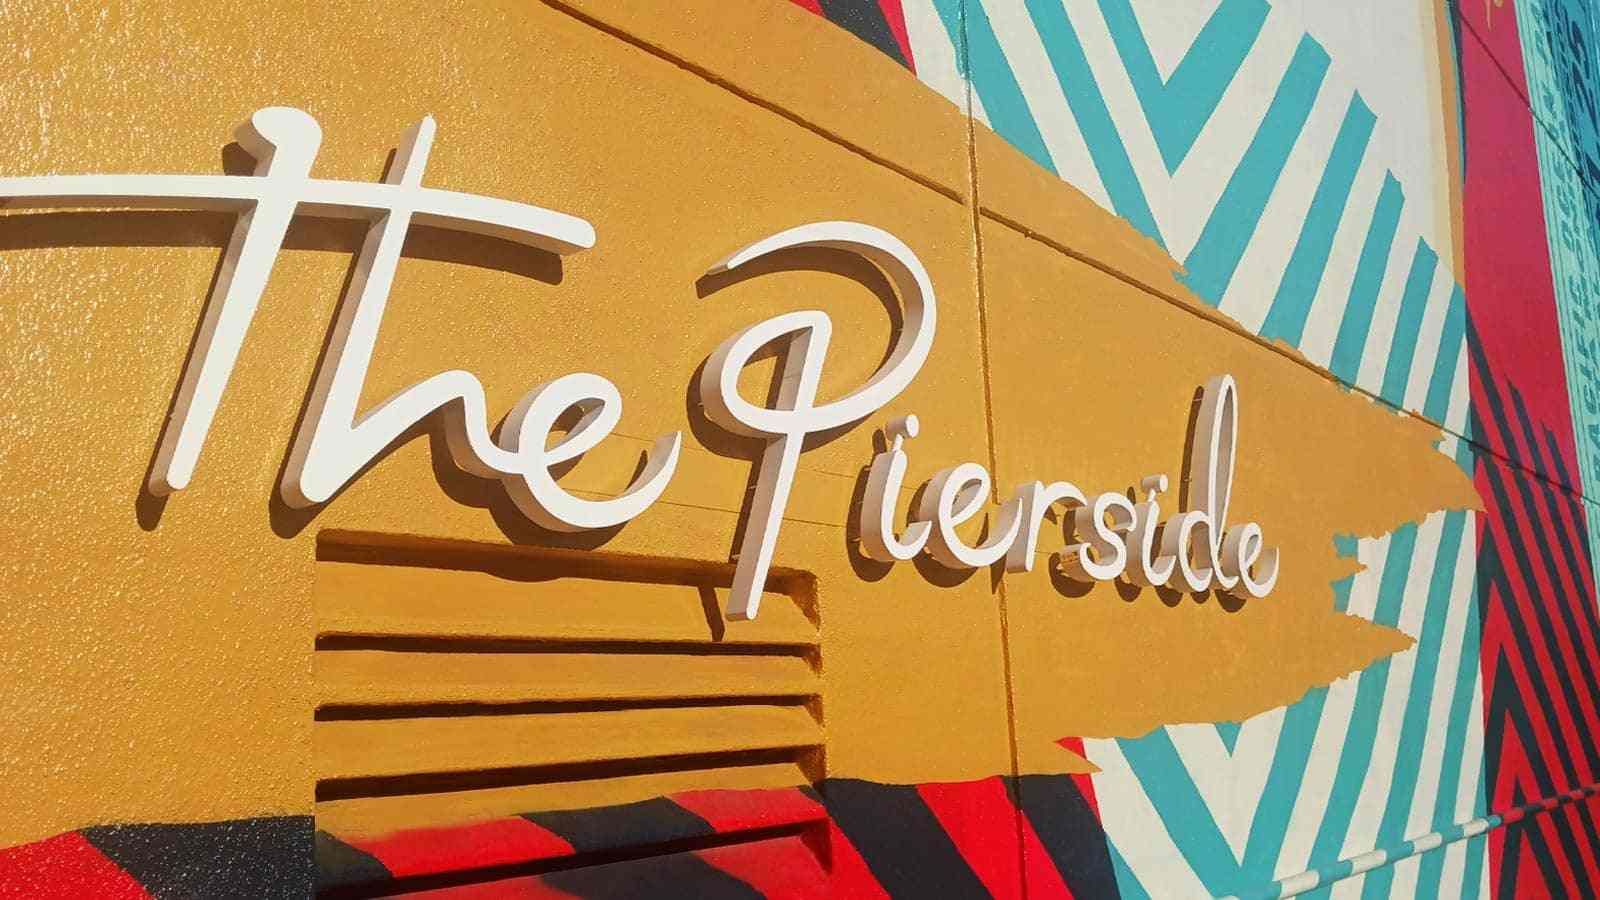 The Pierside logo sign mounted on the facade